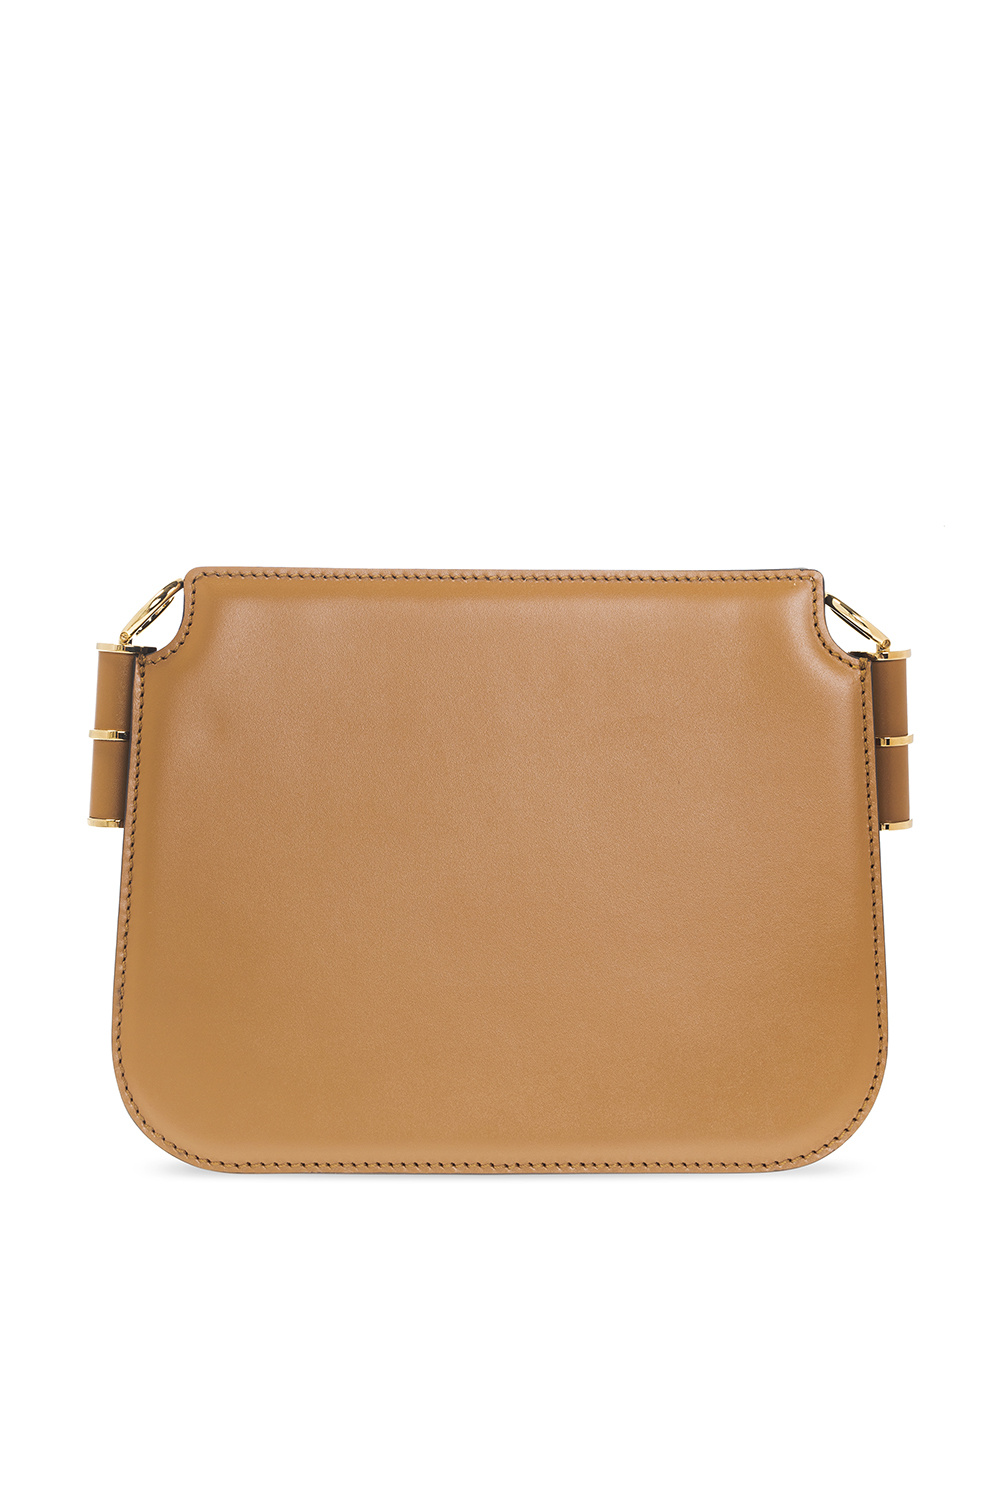 Fendi ‘Fendi Touch’ shoulder bag